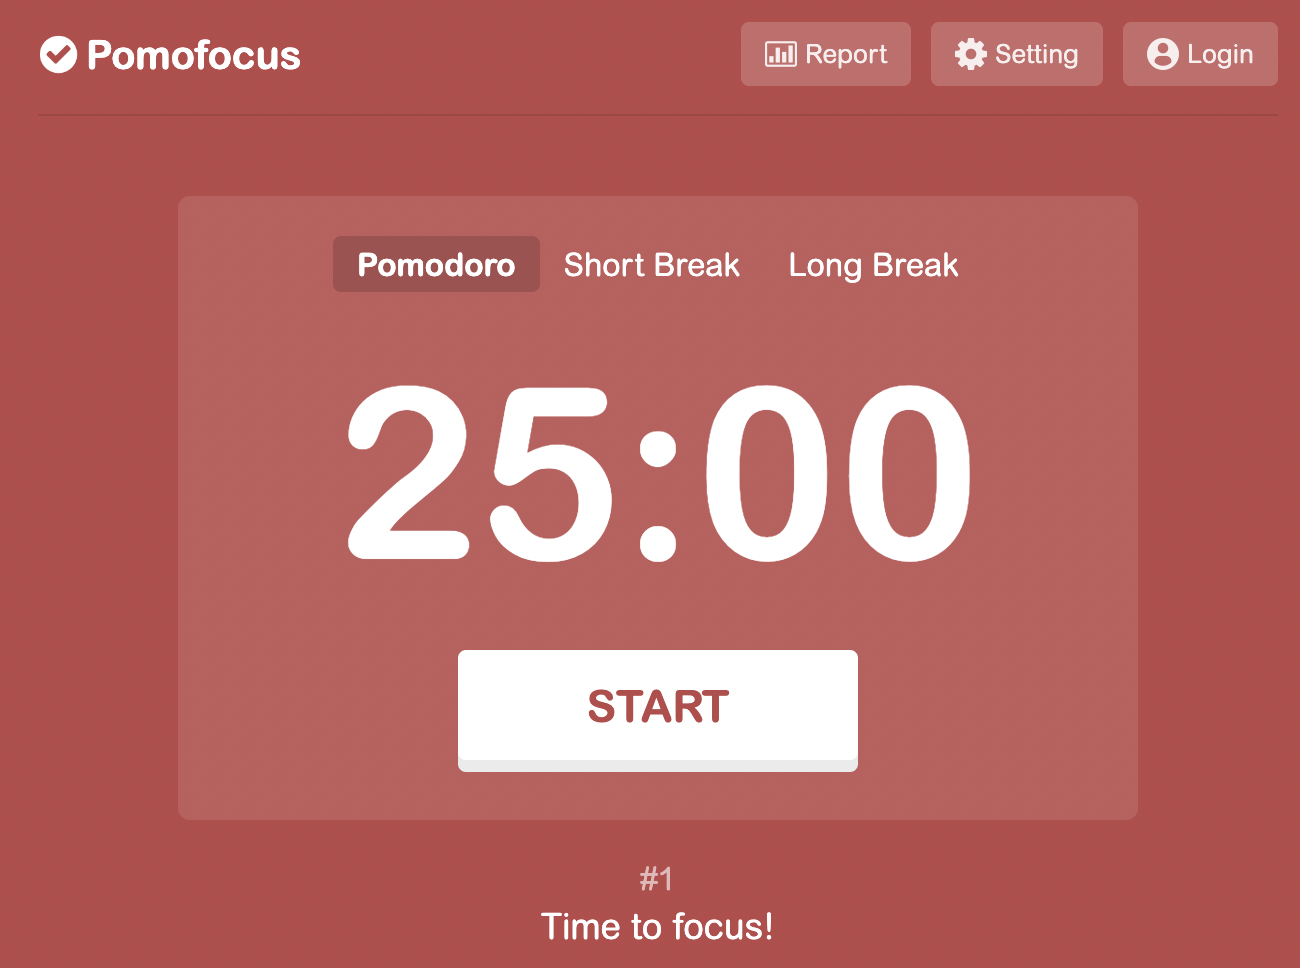 Pomofocus’s Pomodoro Timer tool